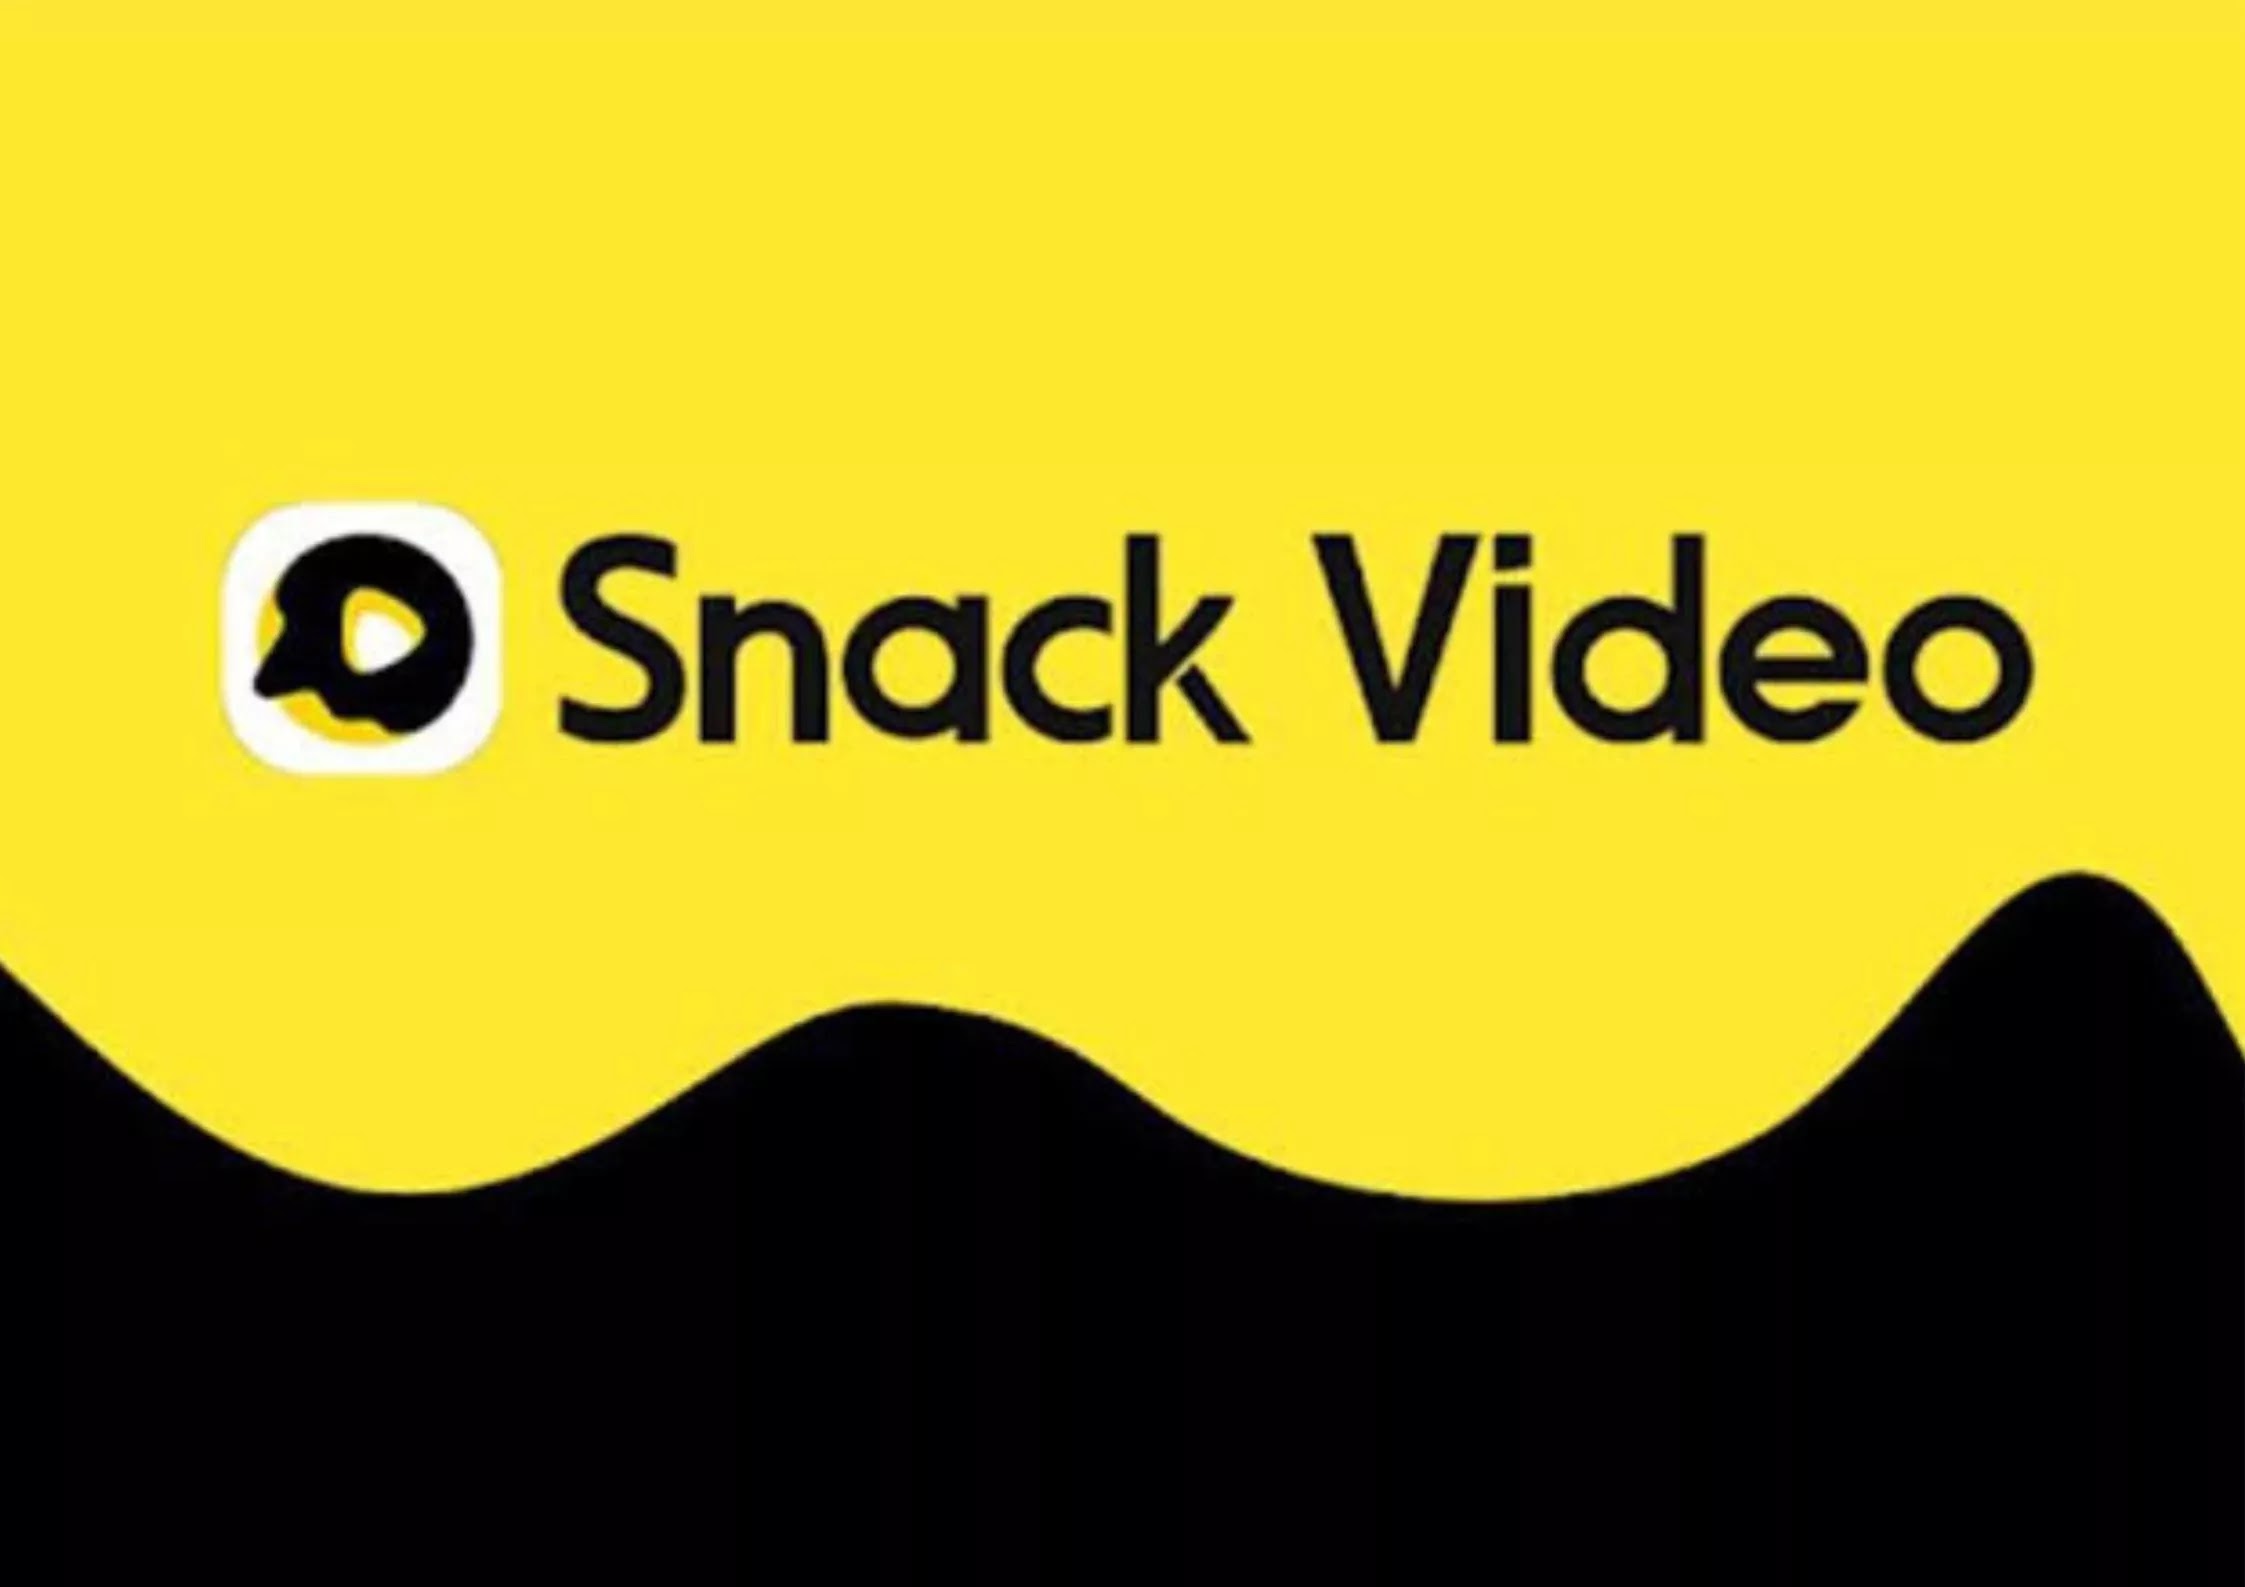 Unduh Video di SnackVideo Tanpa Tanda Air atau Watermark, Ini Dia Caranya